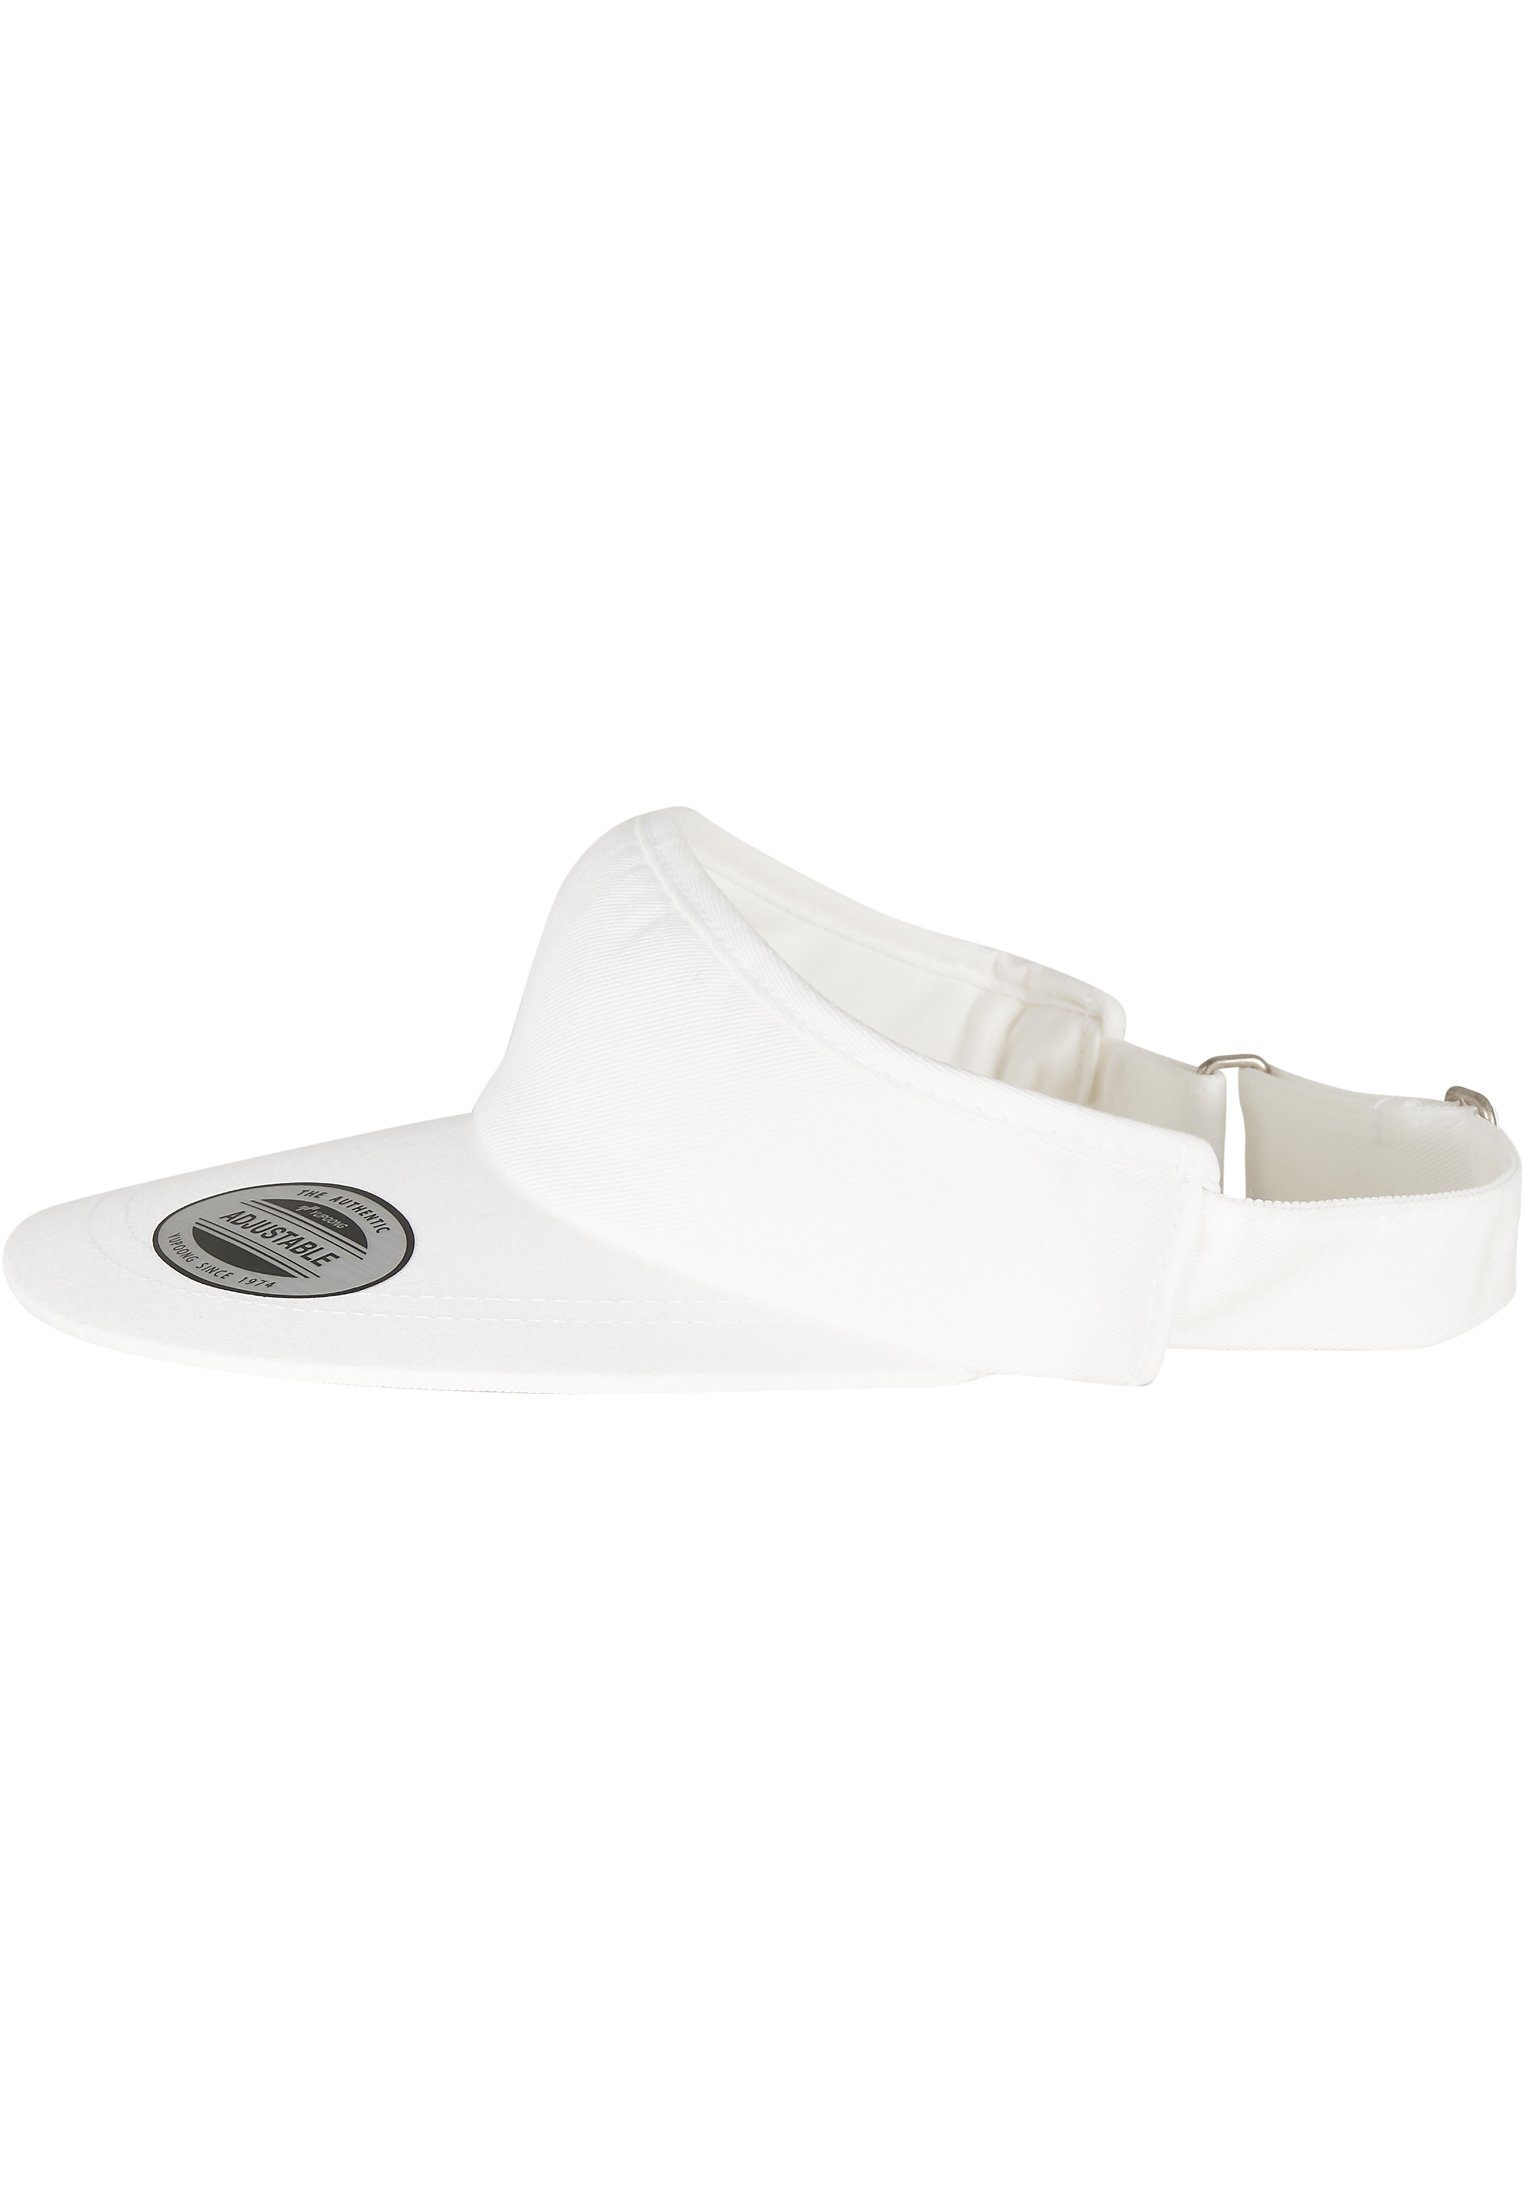 Round Flexfit white Flat Snapback Cap Visor Flex Cap